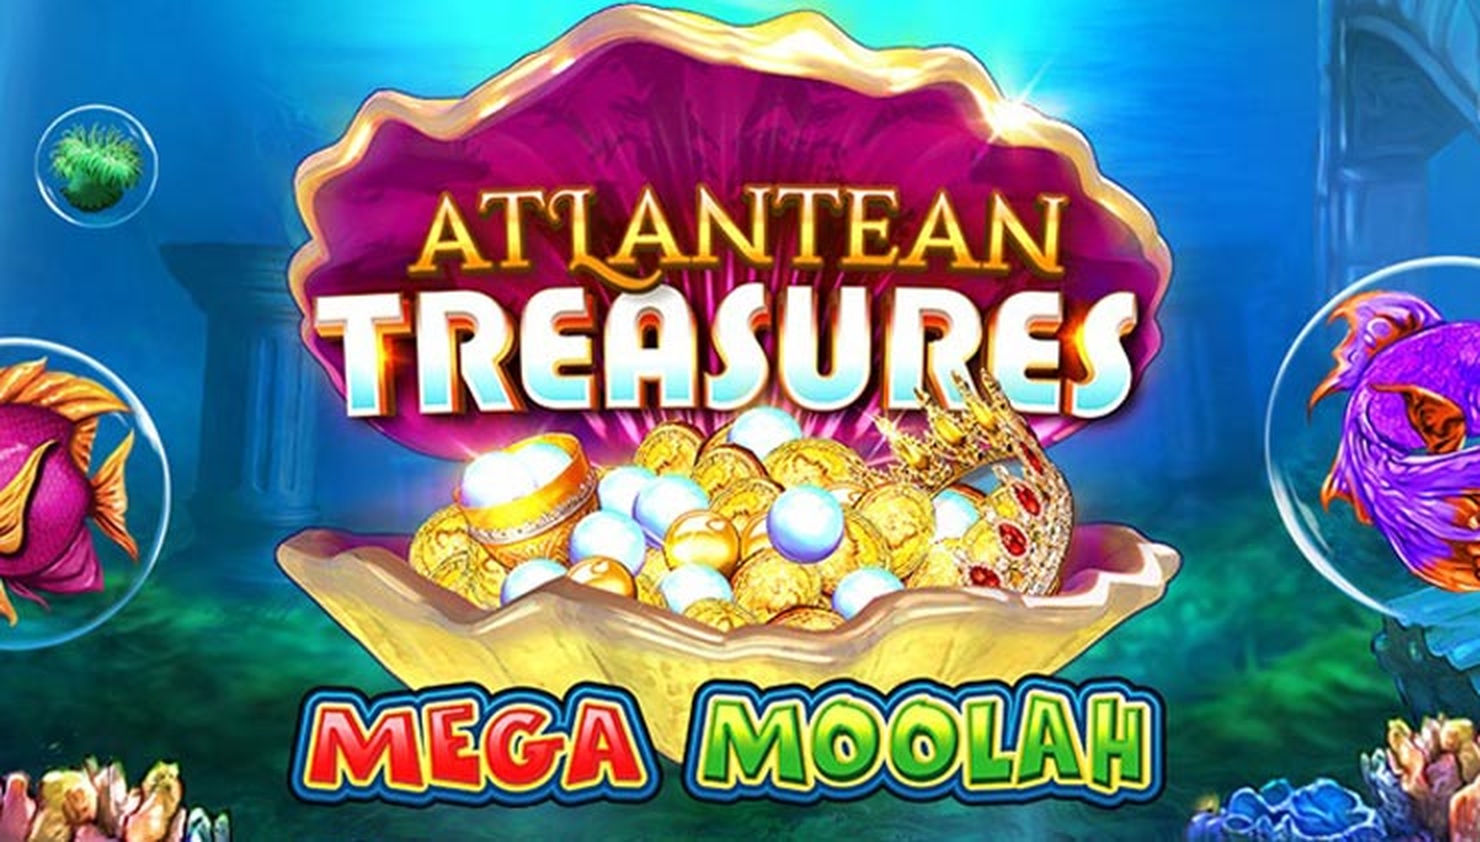 The Atlantean Treasures Mega Moolah Online Slot Demo Game by Neon Valley Studios